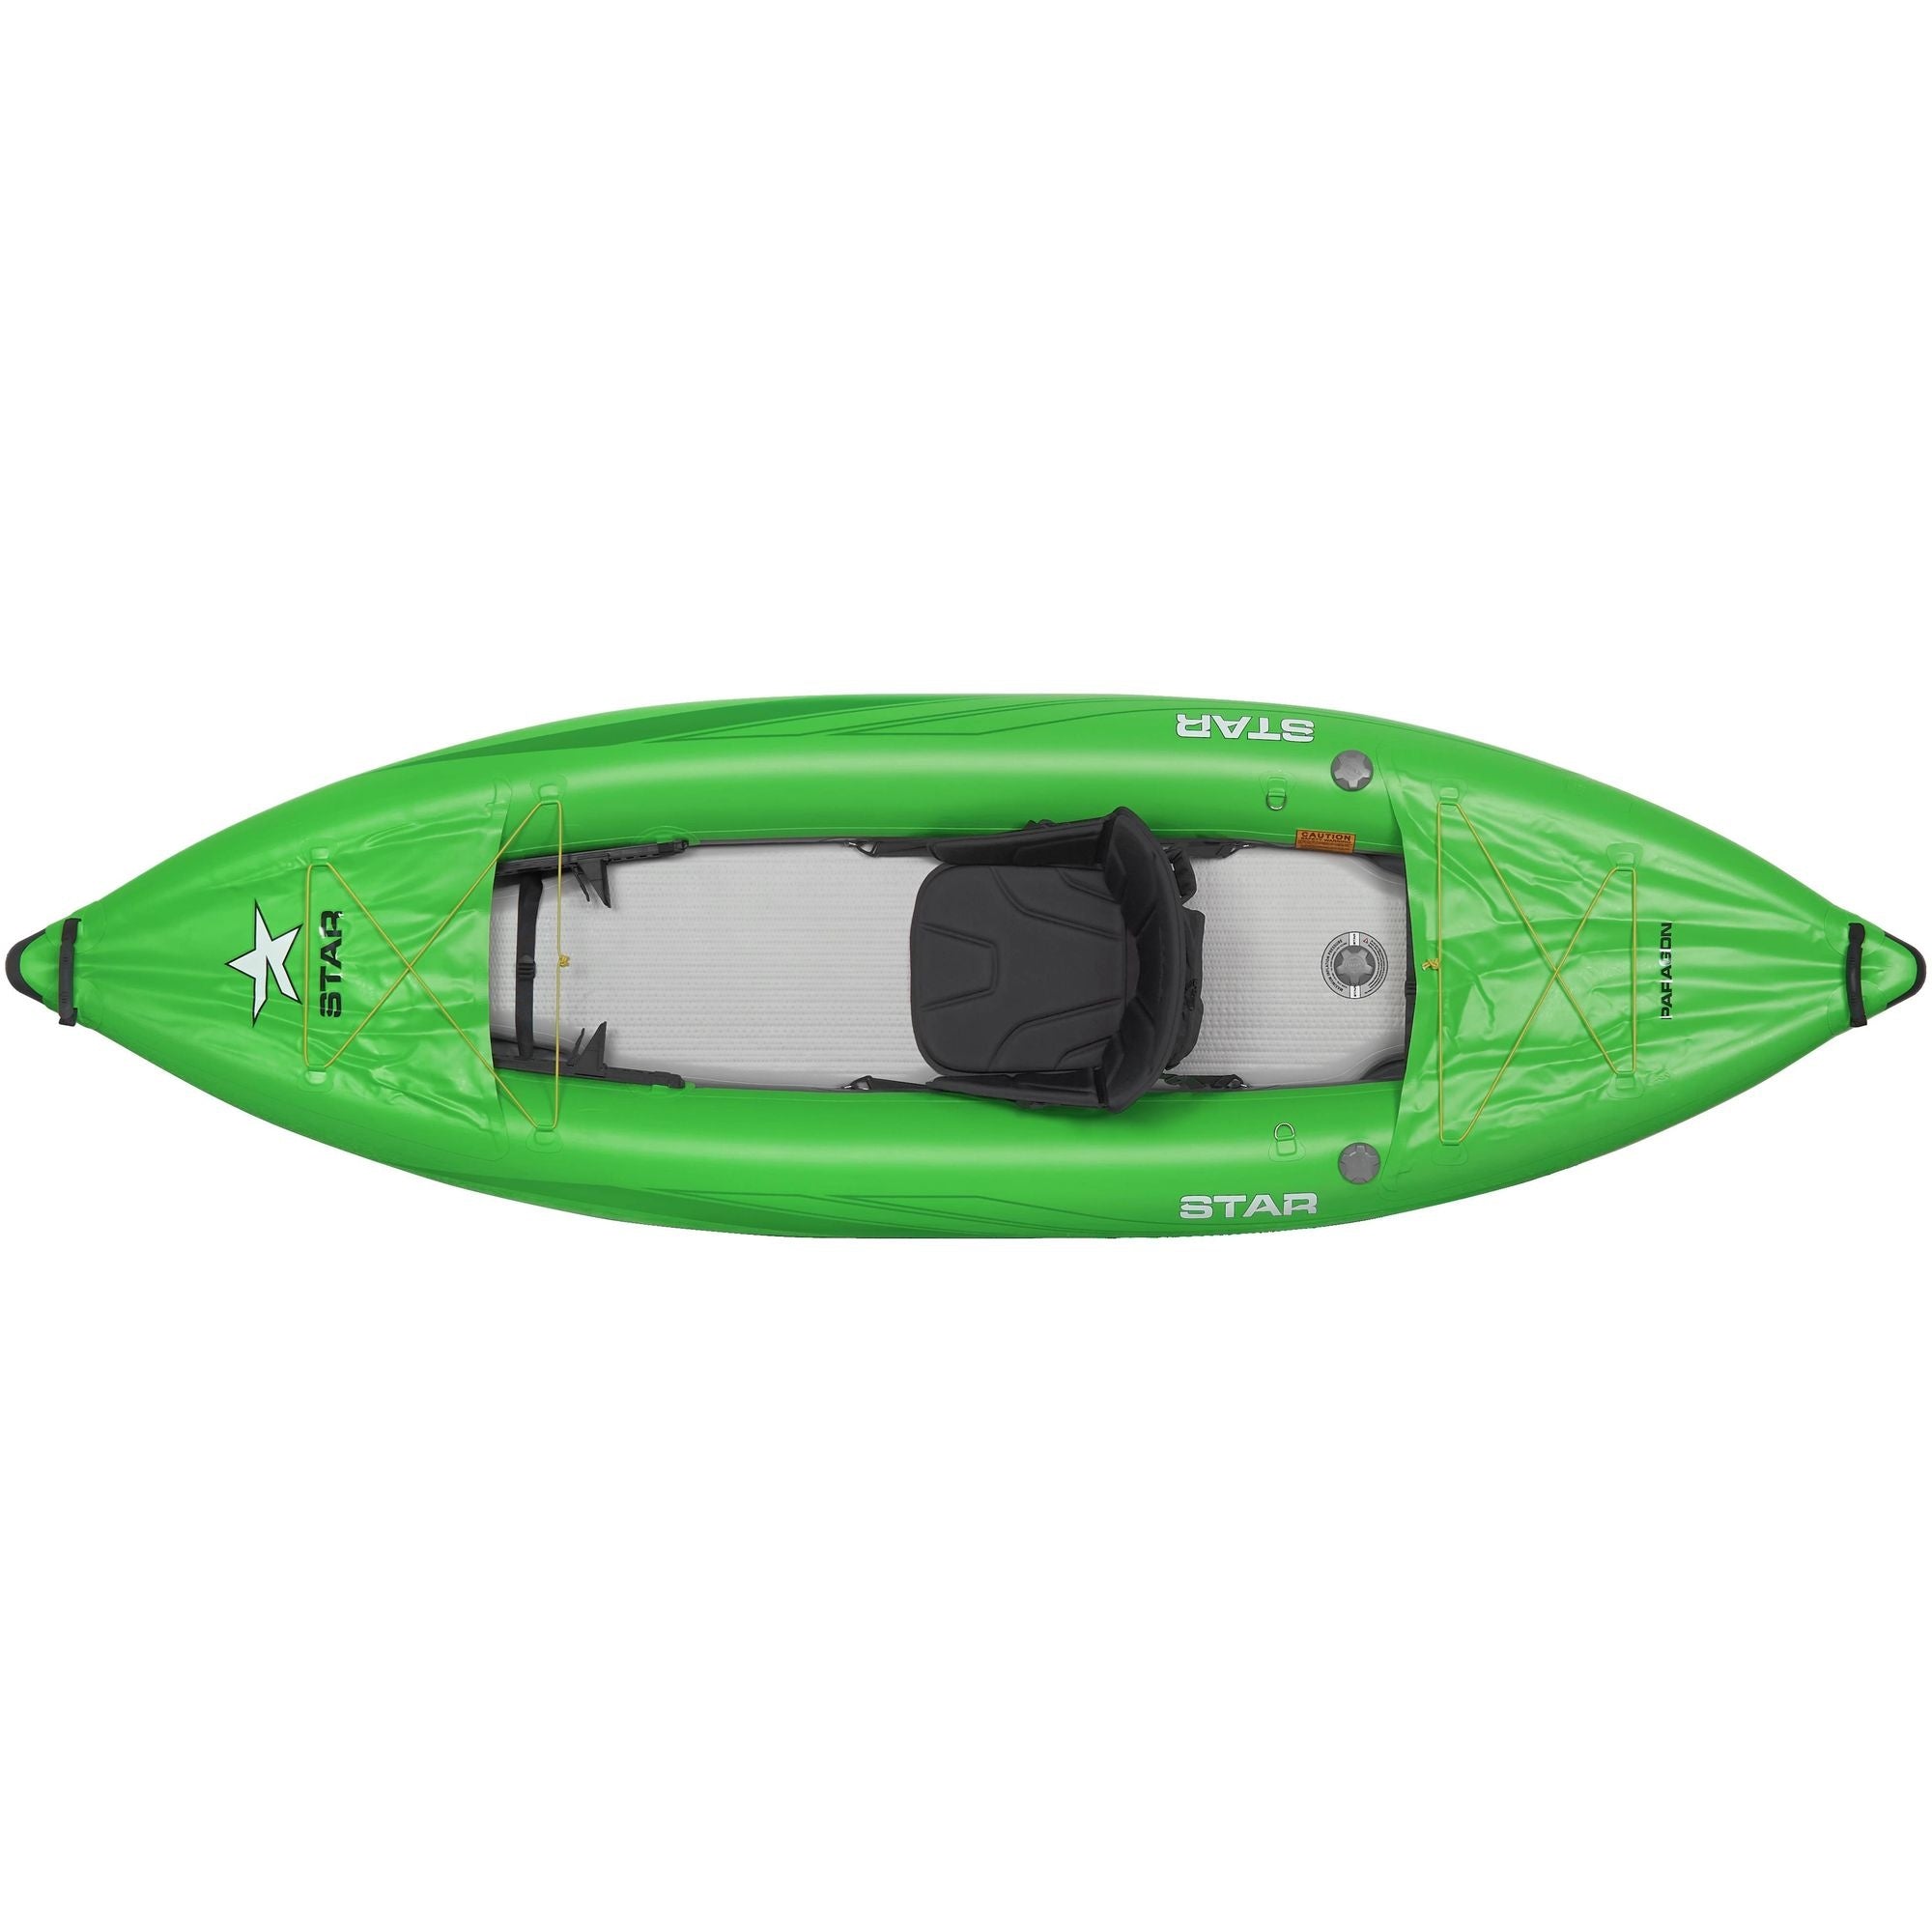 STAR - Paragon Inflatable Kayak